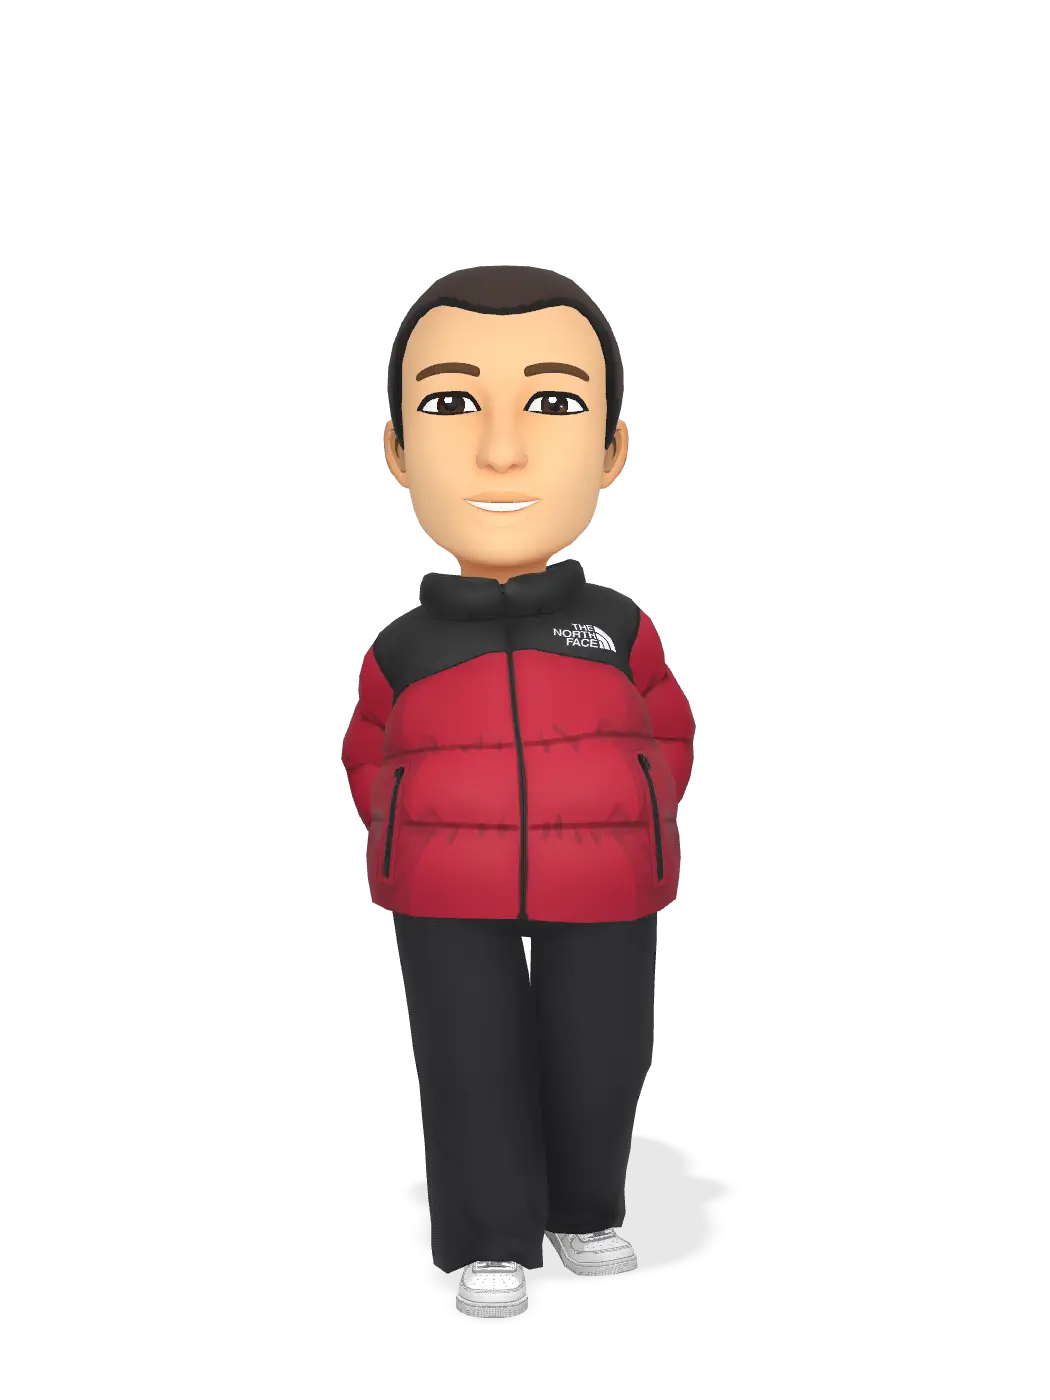 3D Bitmoji for charliereno3 avatar